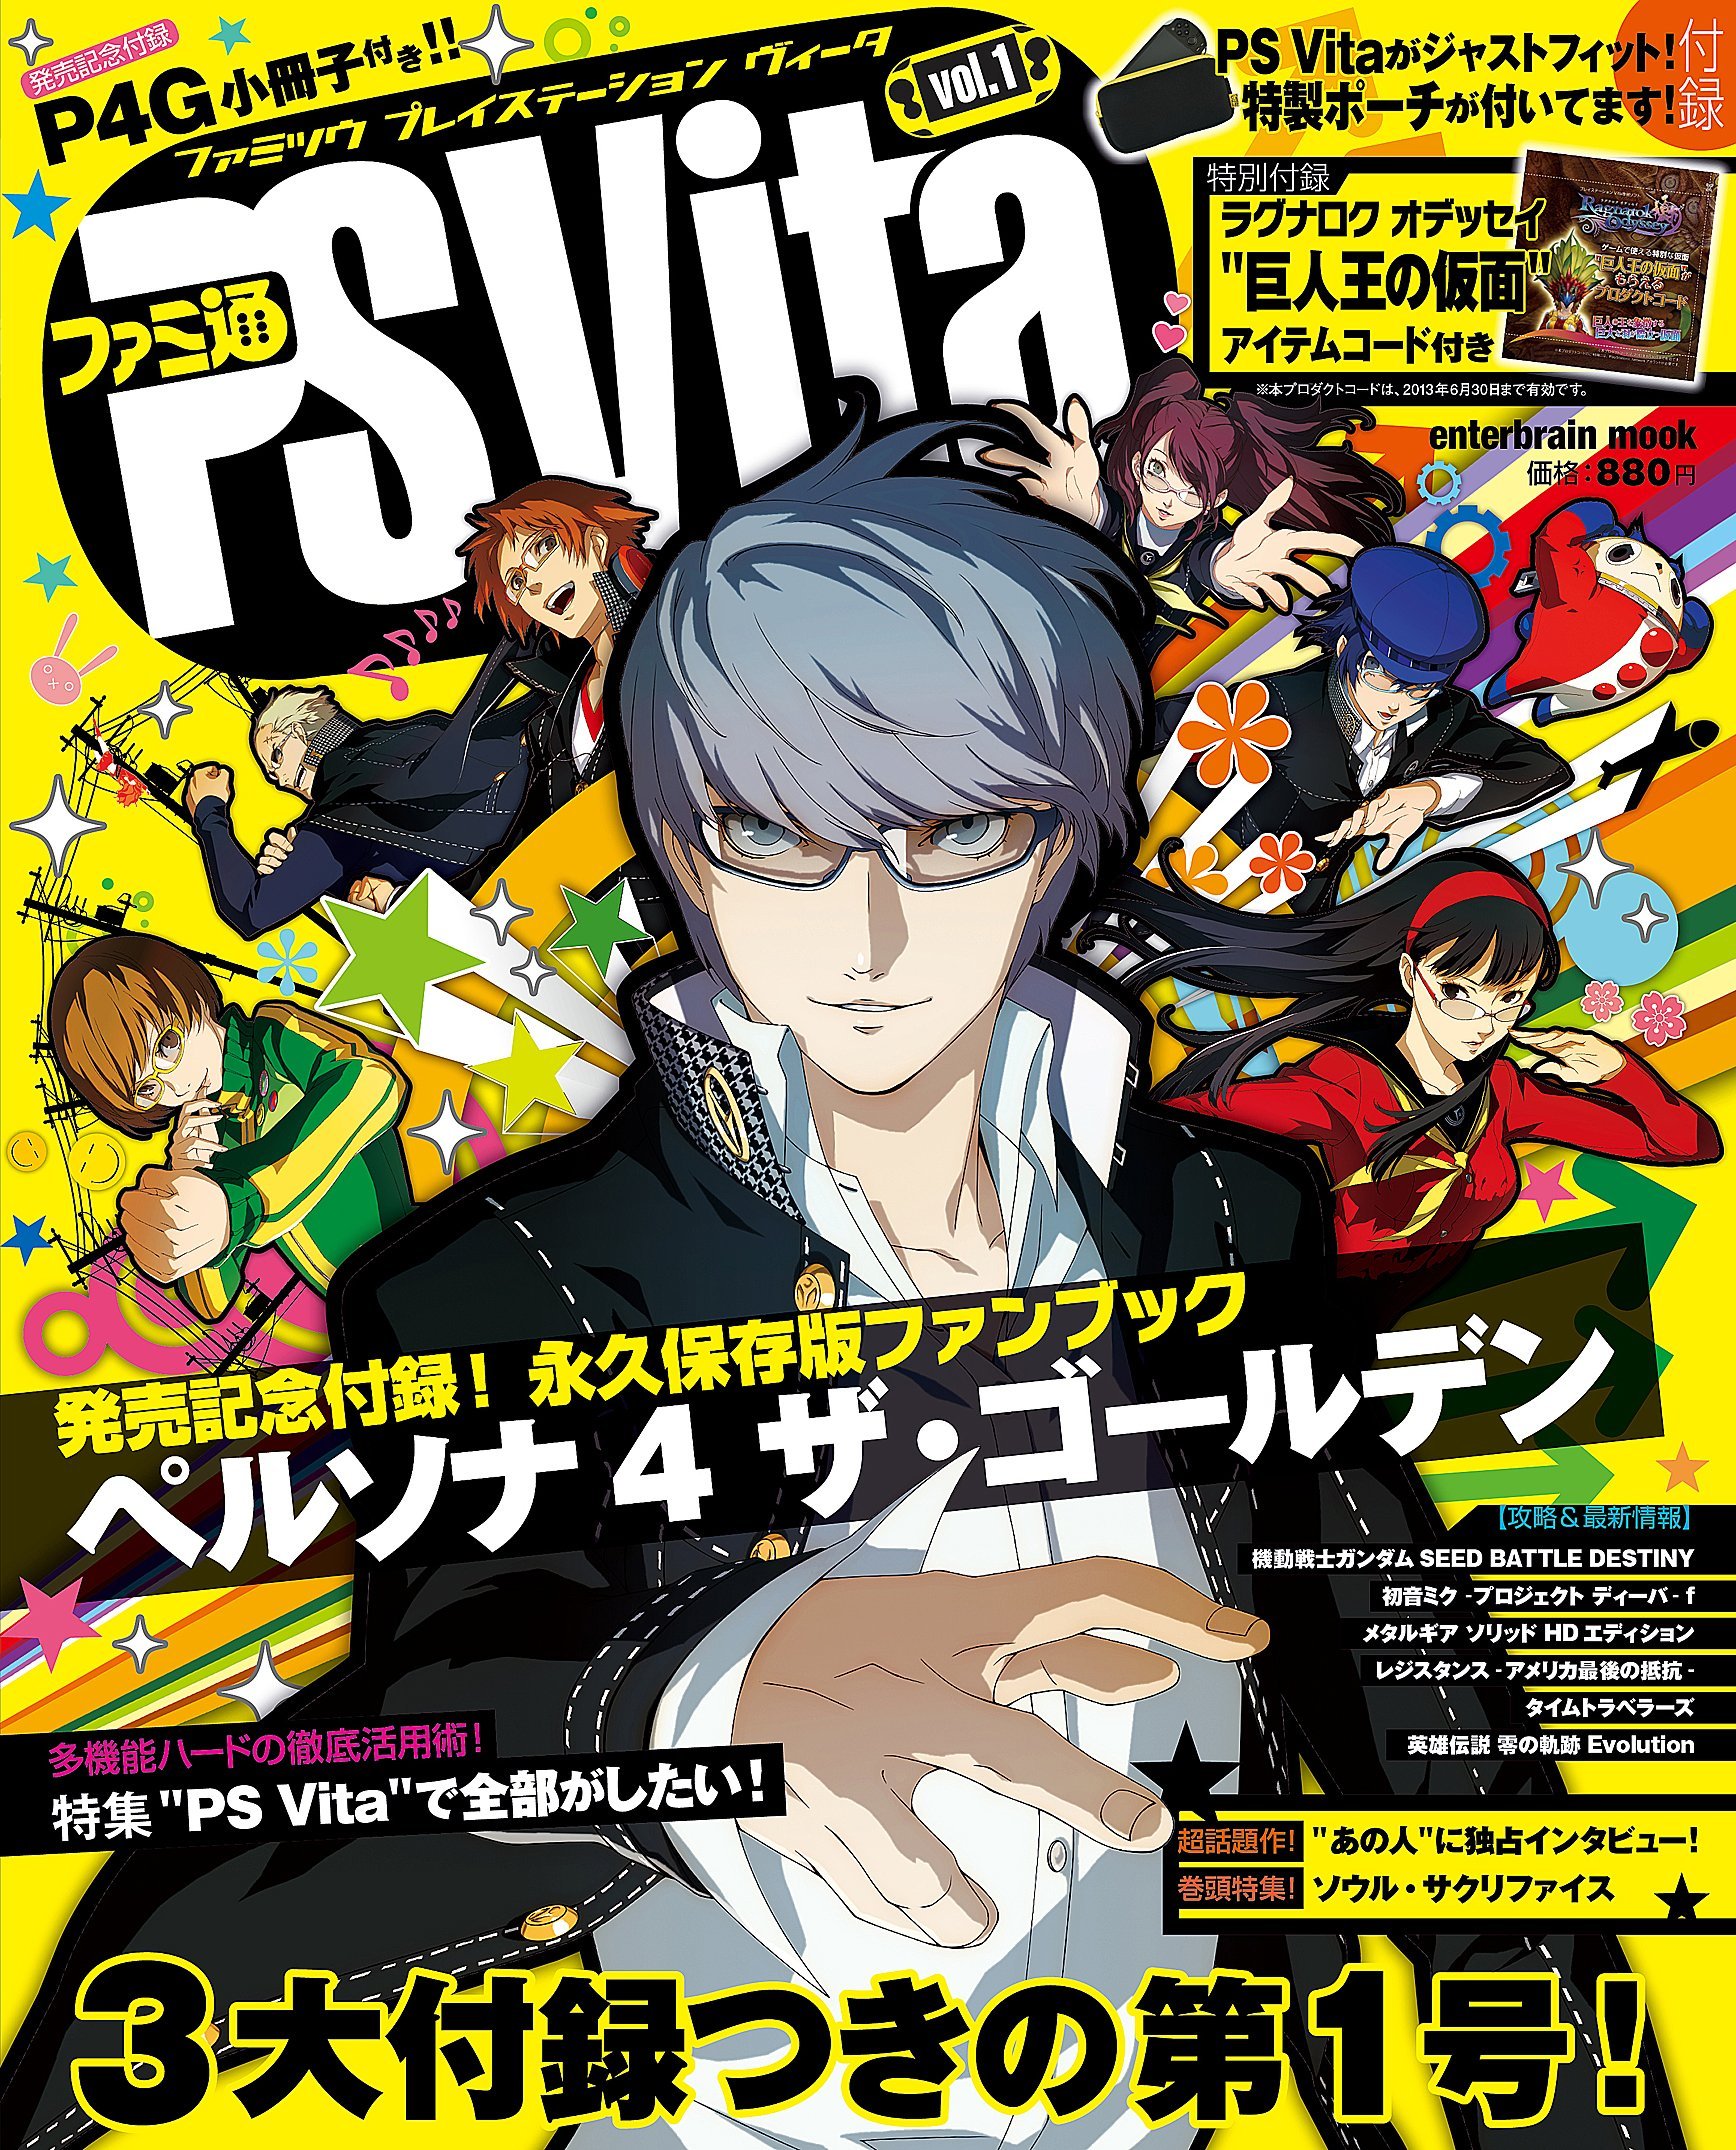 Famitsu Ps Vita Vol 1 Summer 12 Famitsu Specials Retromags Community